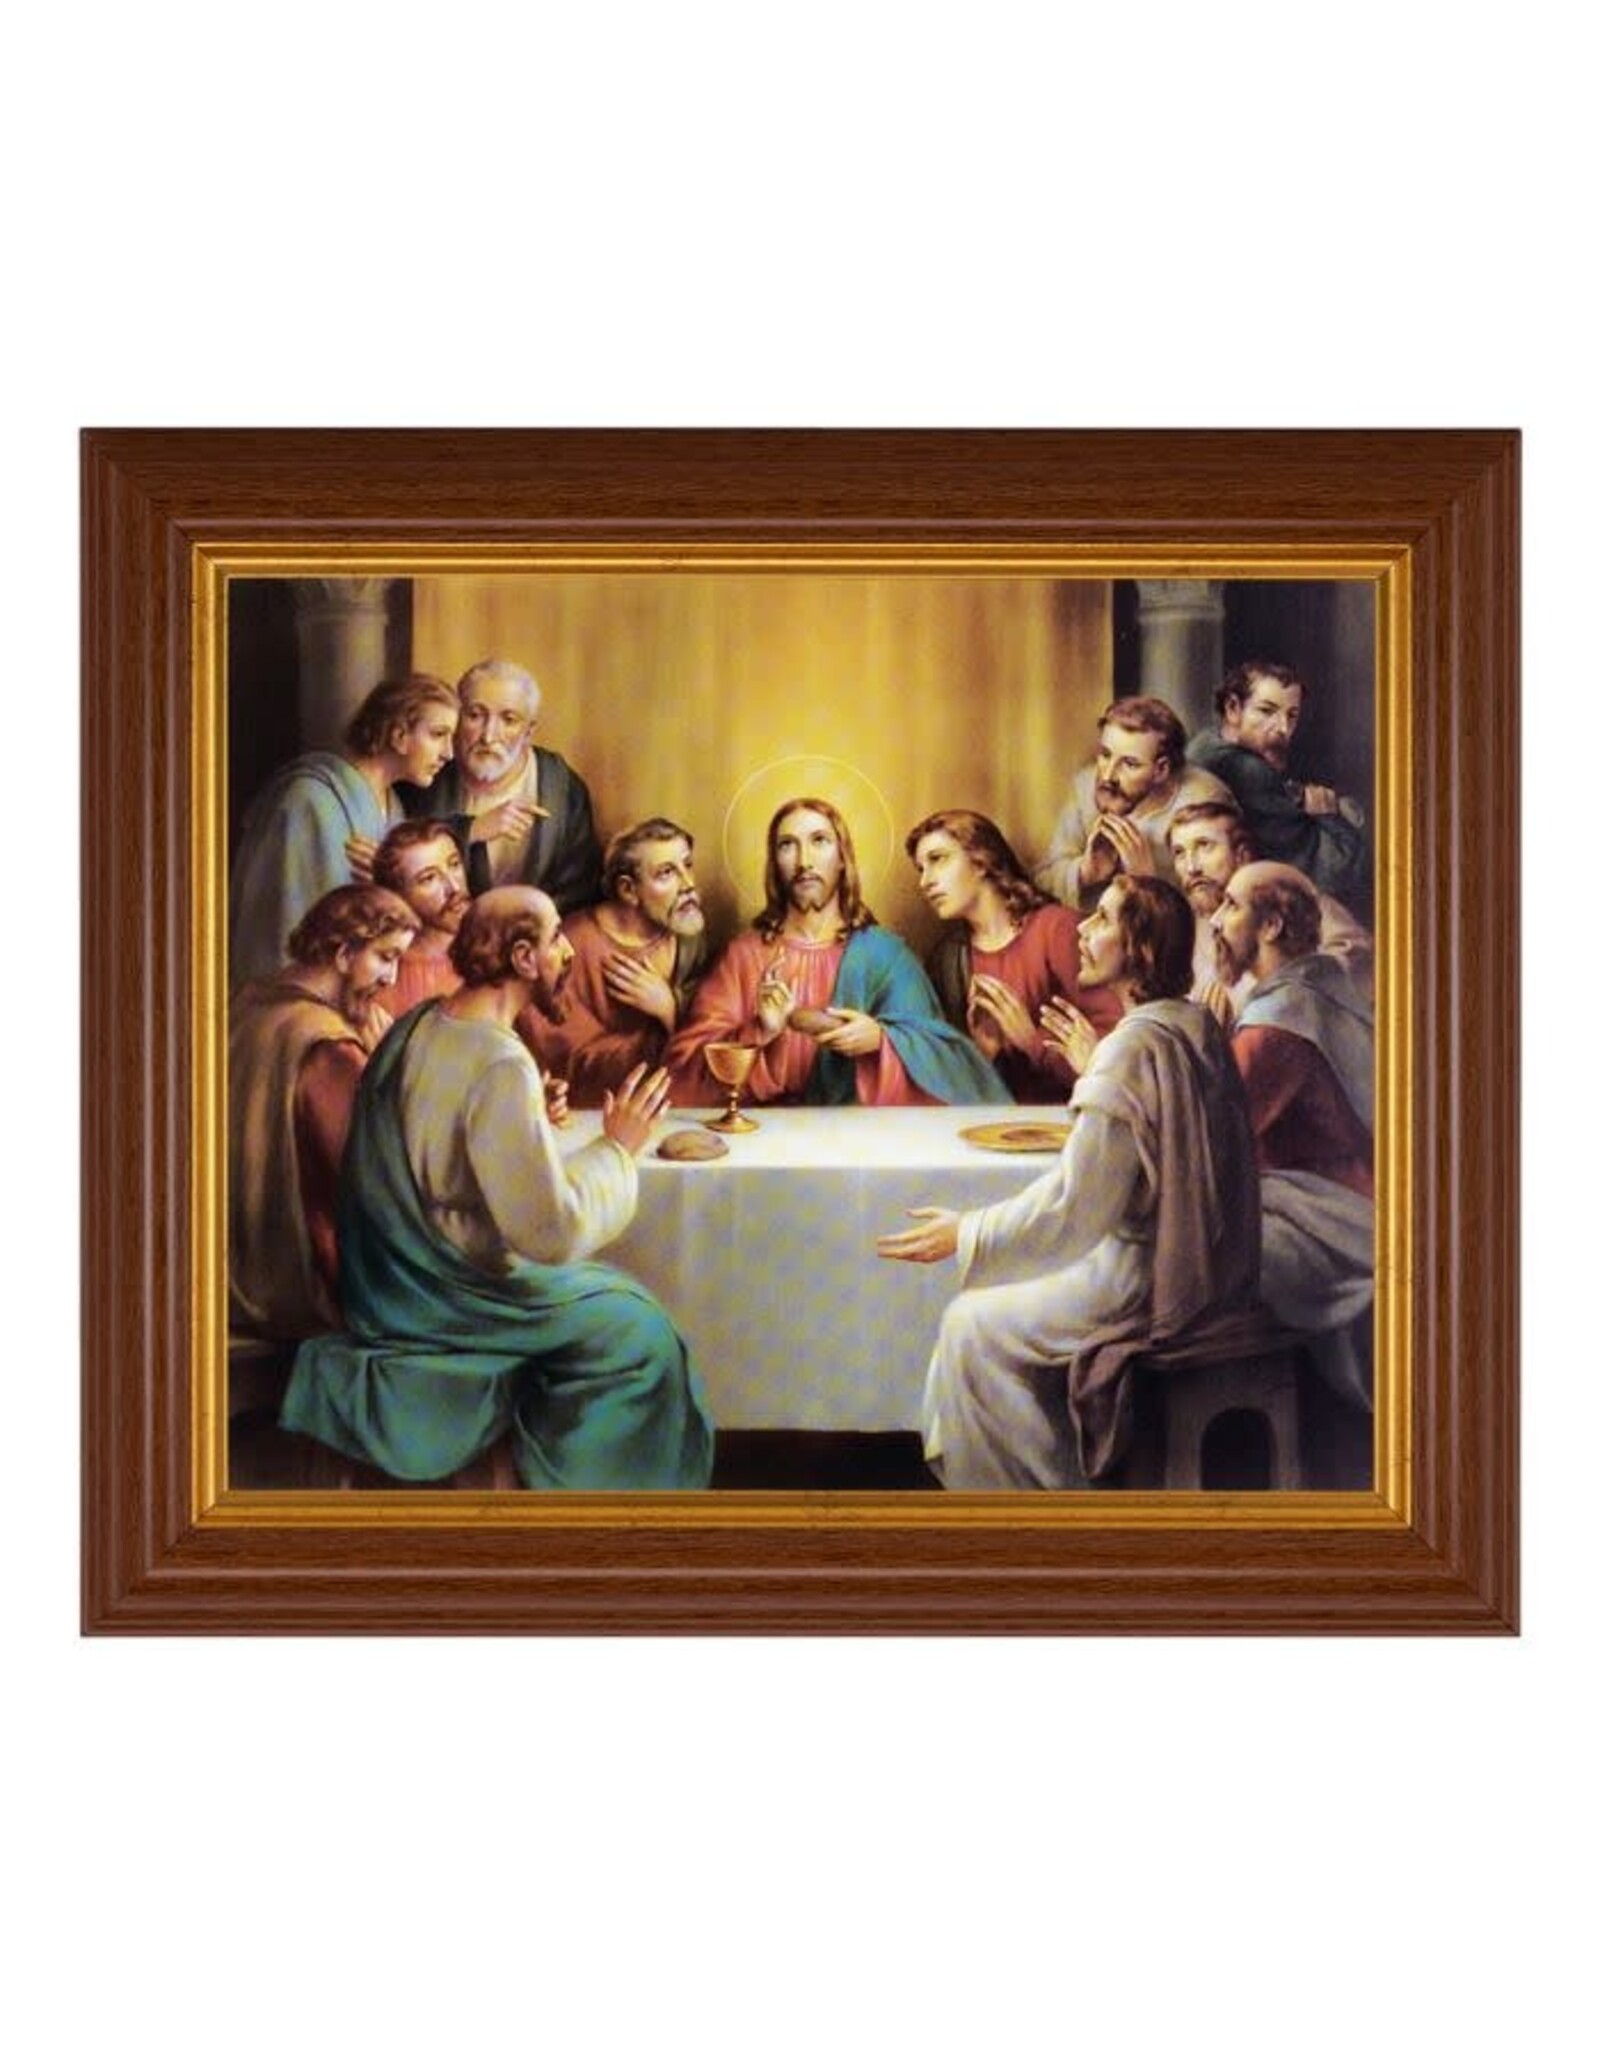 Hirten Last Supper Picture - Walnut Finish Beveled Frame, Bonella (10 x 8")